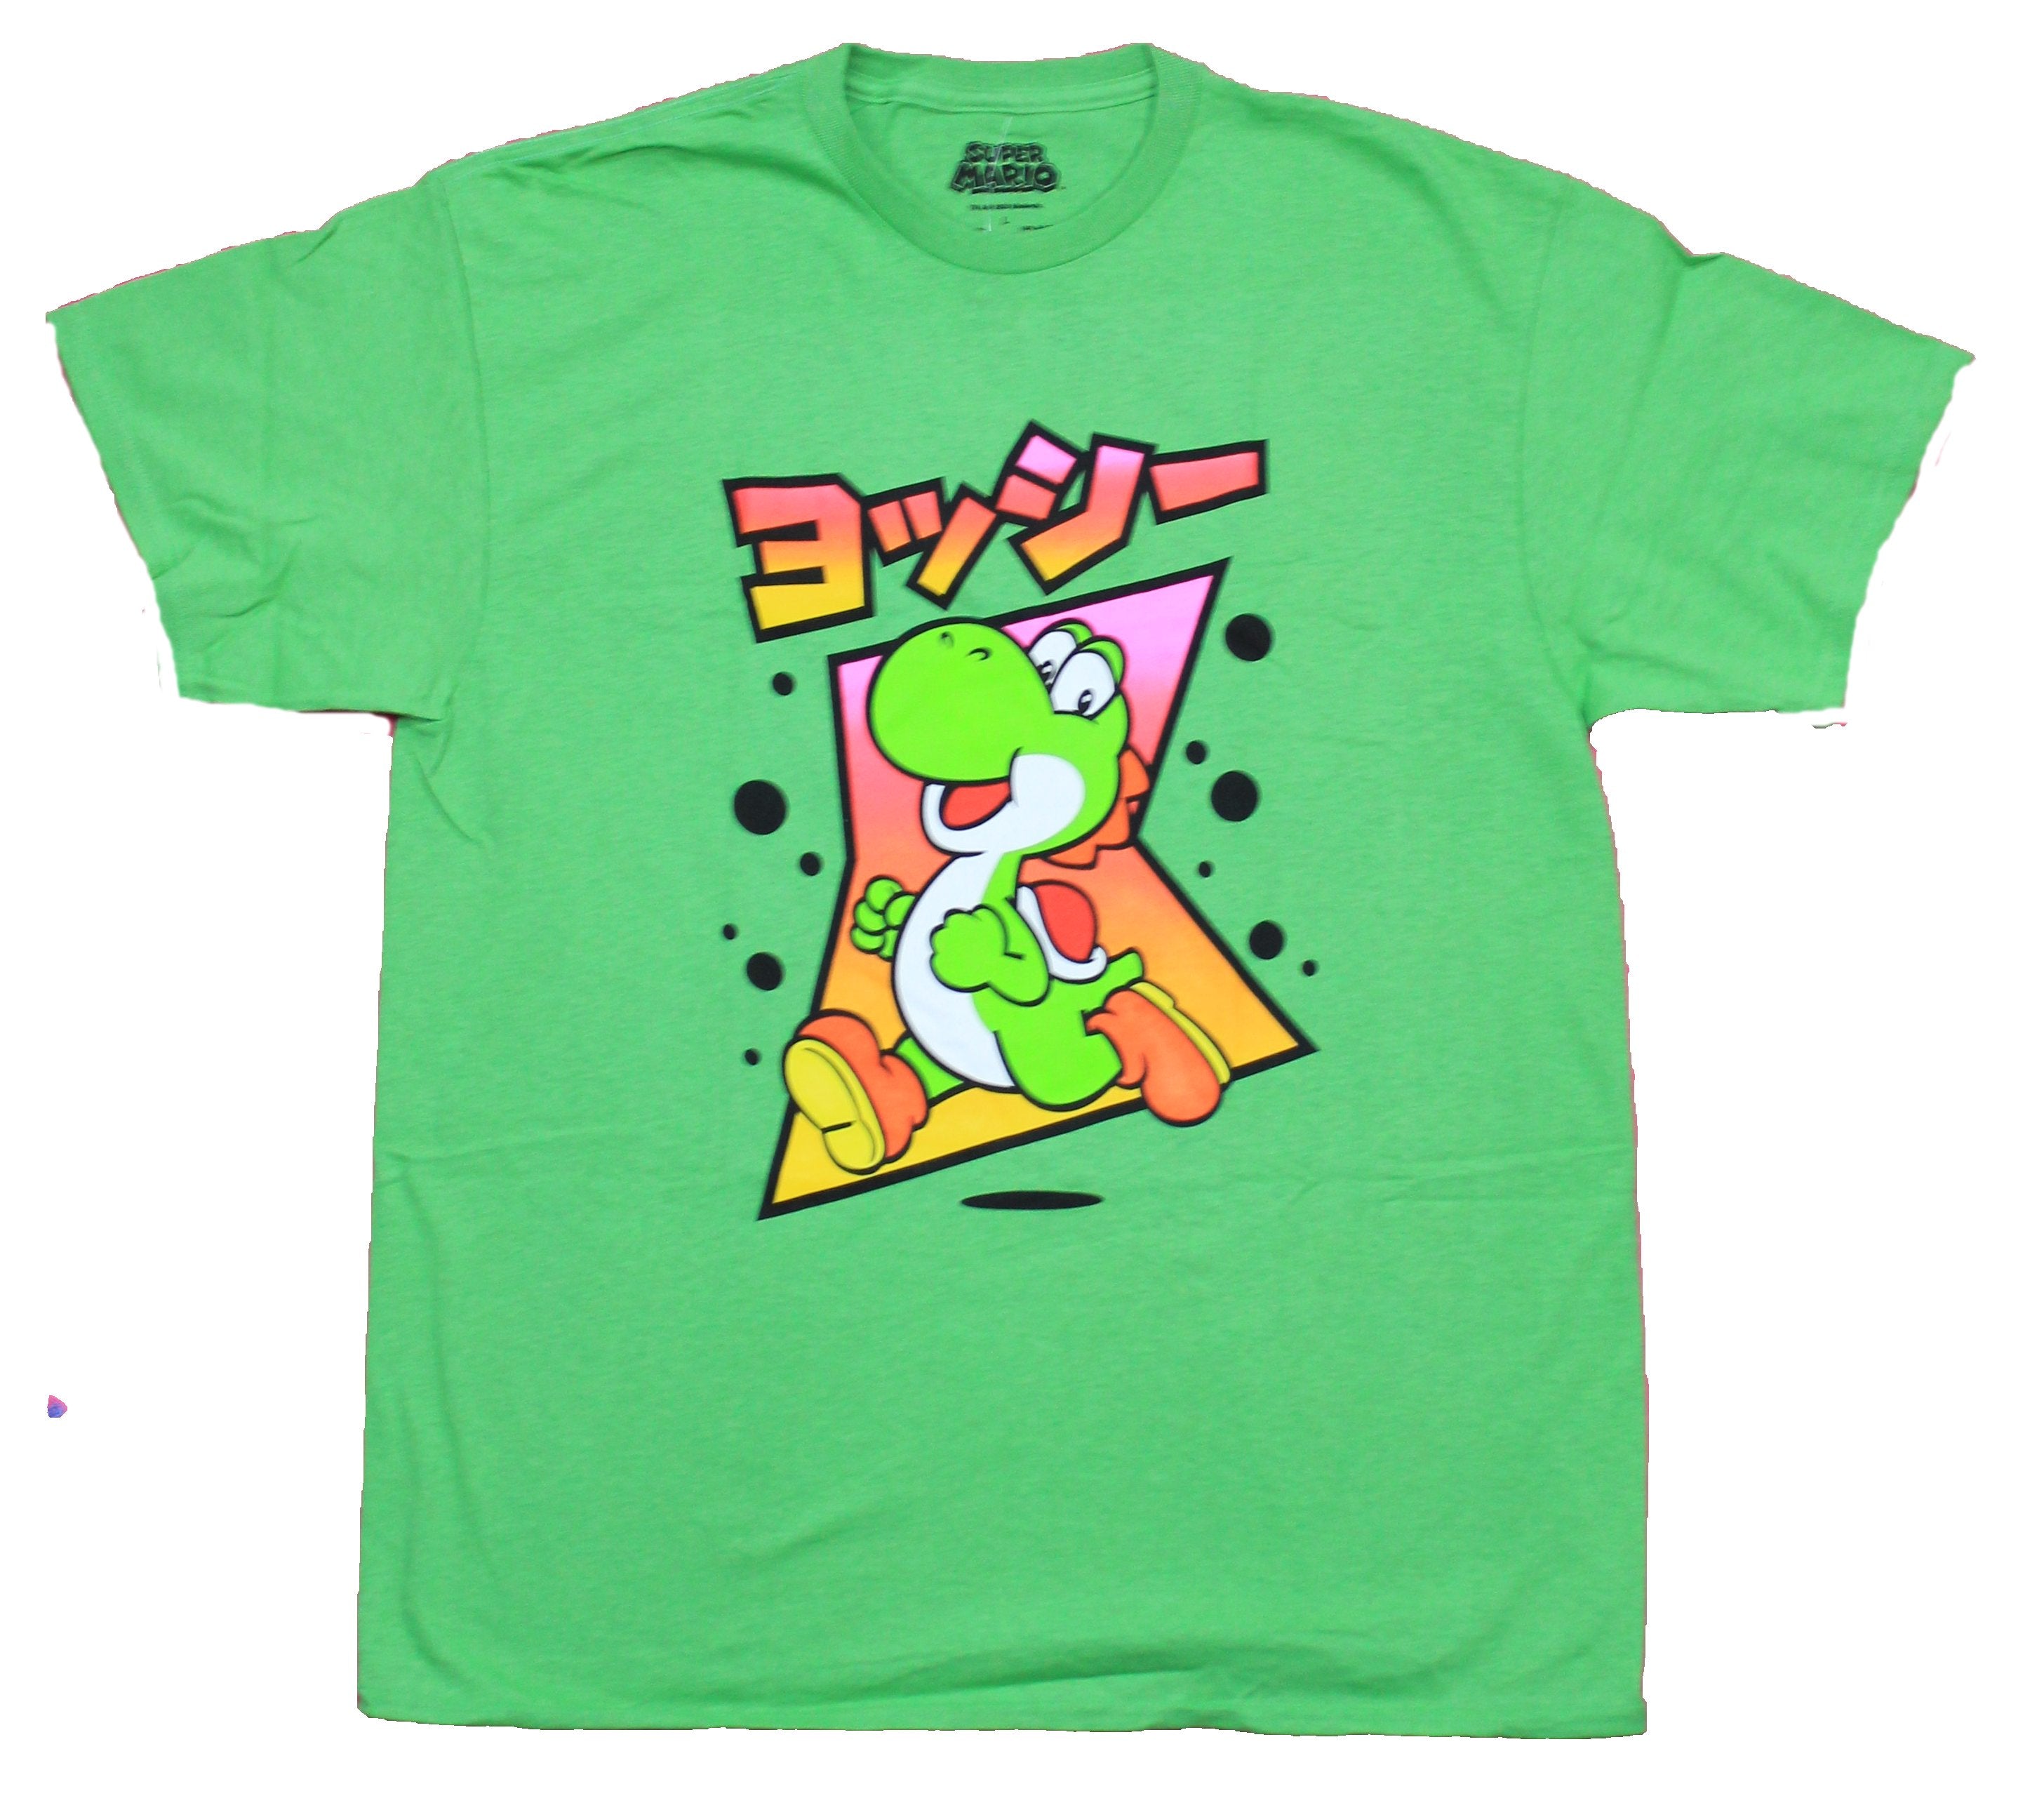 Super Mario Brothers Mens T-Shirt - Cartoon Running Yoshi Under Kanji